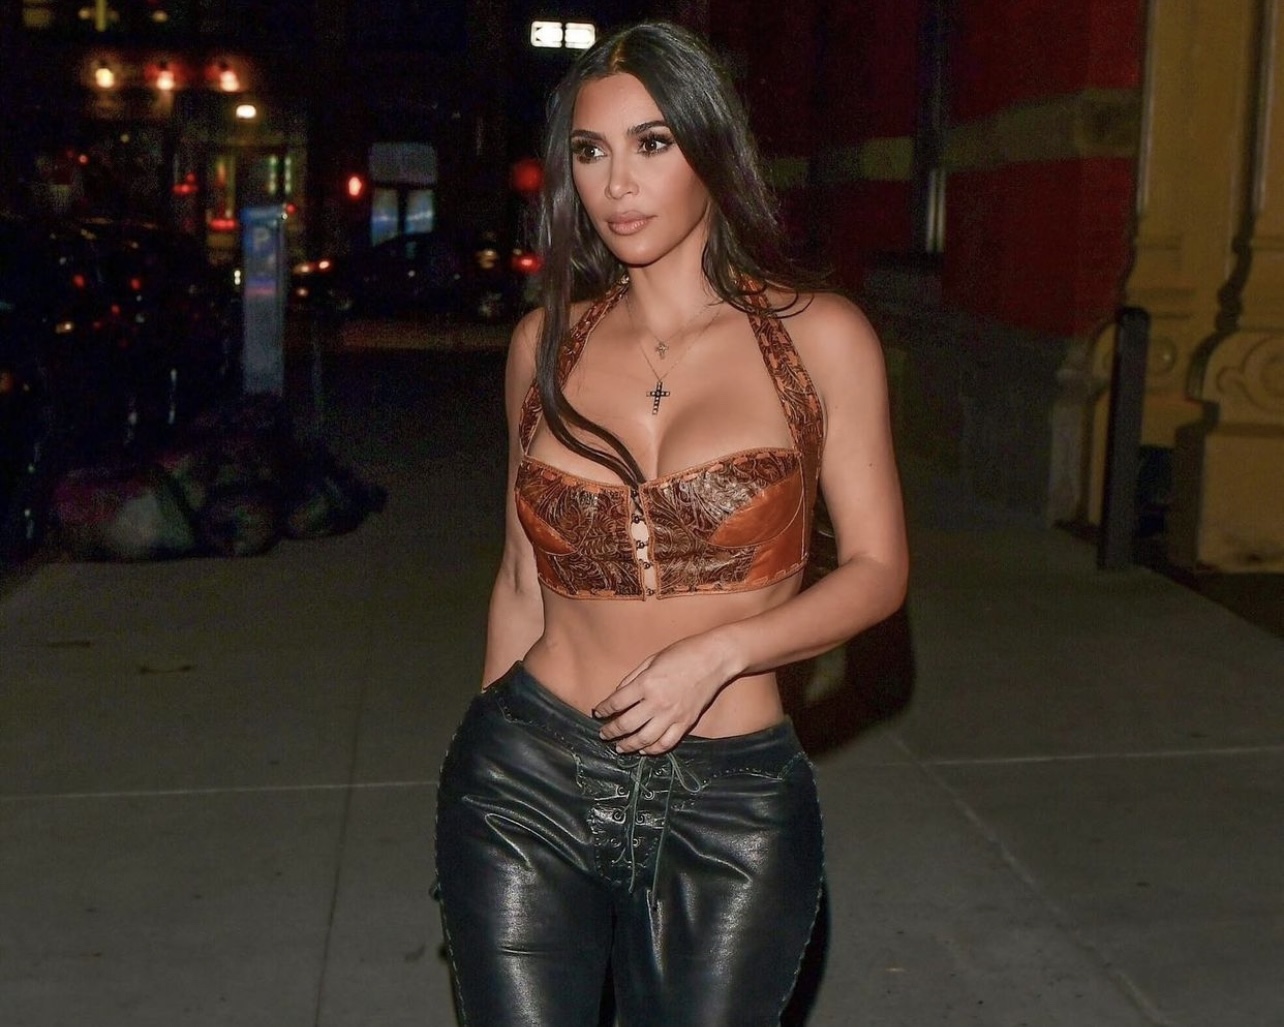 Khloe Kardashian Is Selling Her Used Underwear - Celebrities - Nigeria